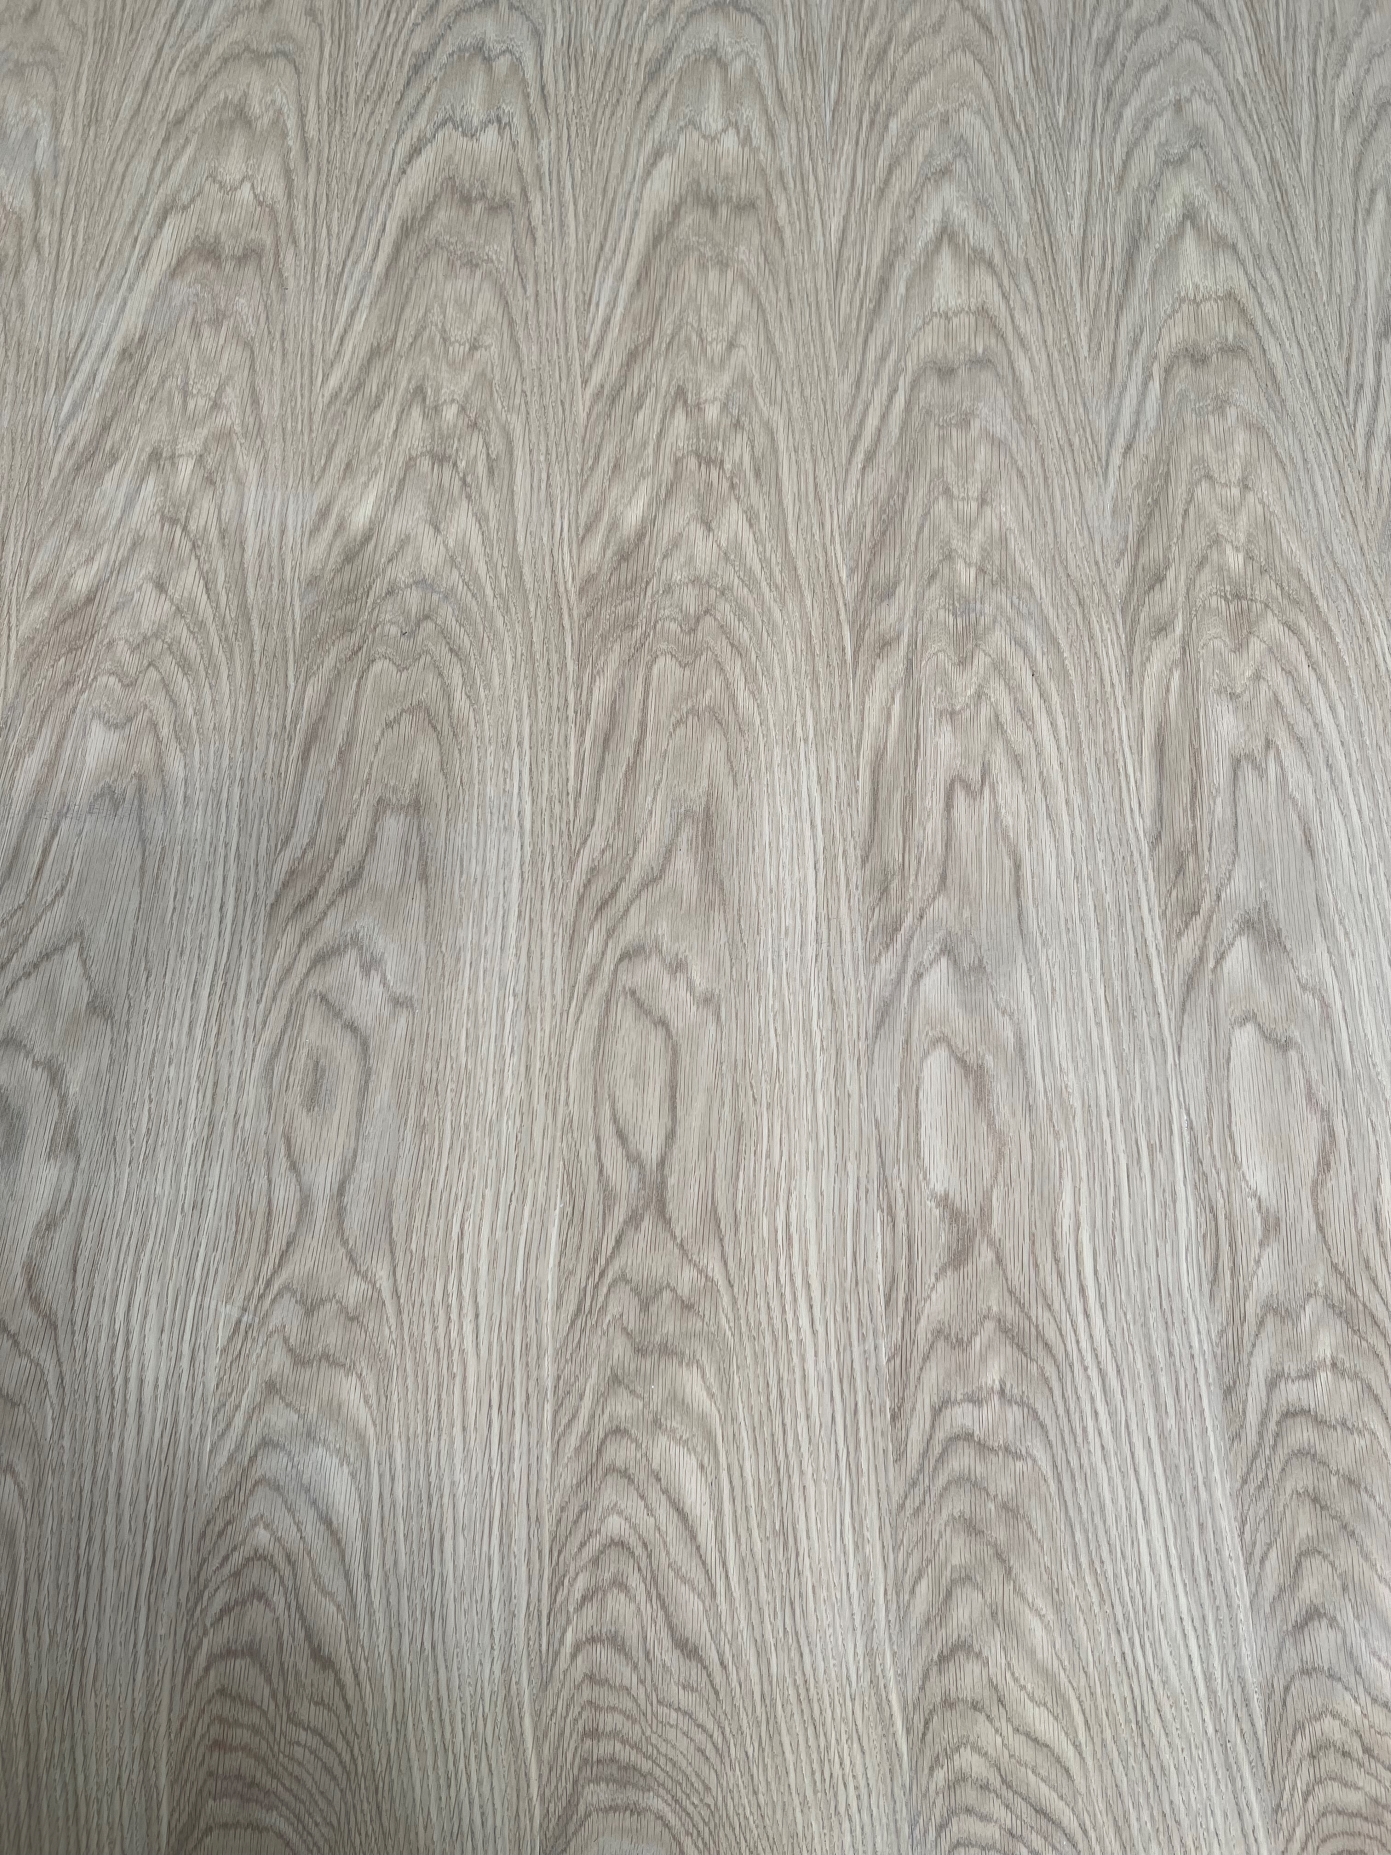 American White Oak on Plywood Crown Cut 1F 2390x1190x34mm (2)